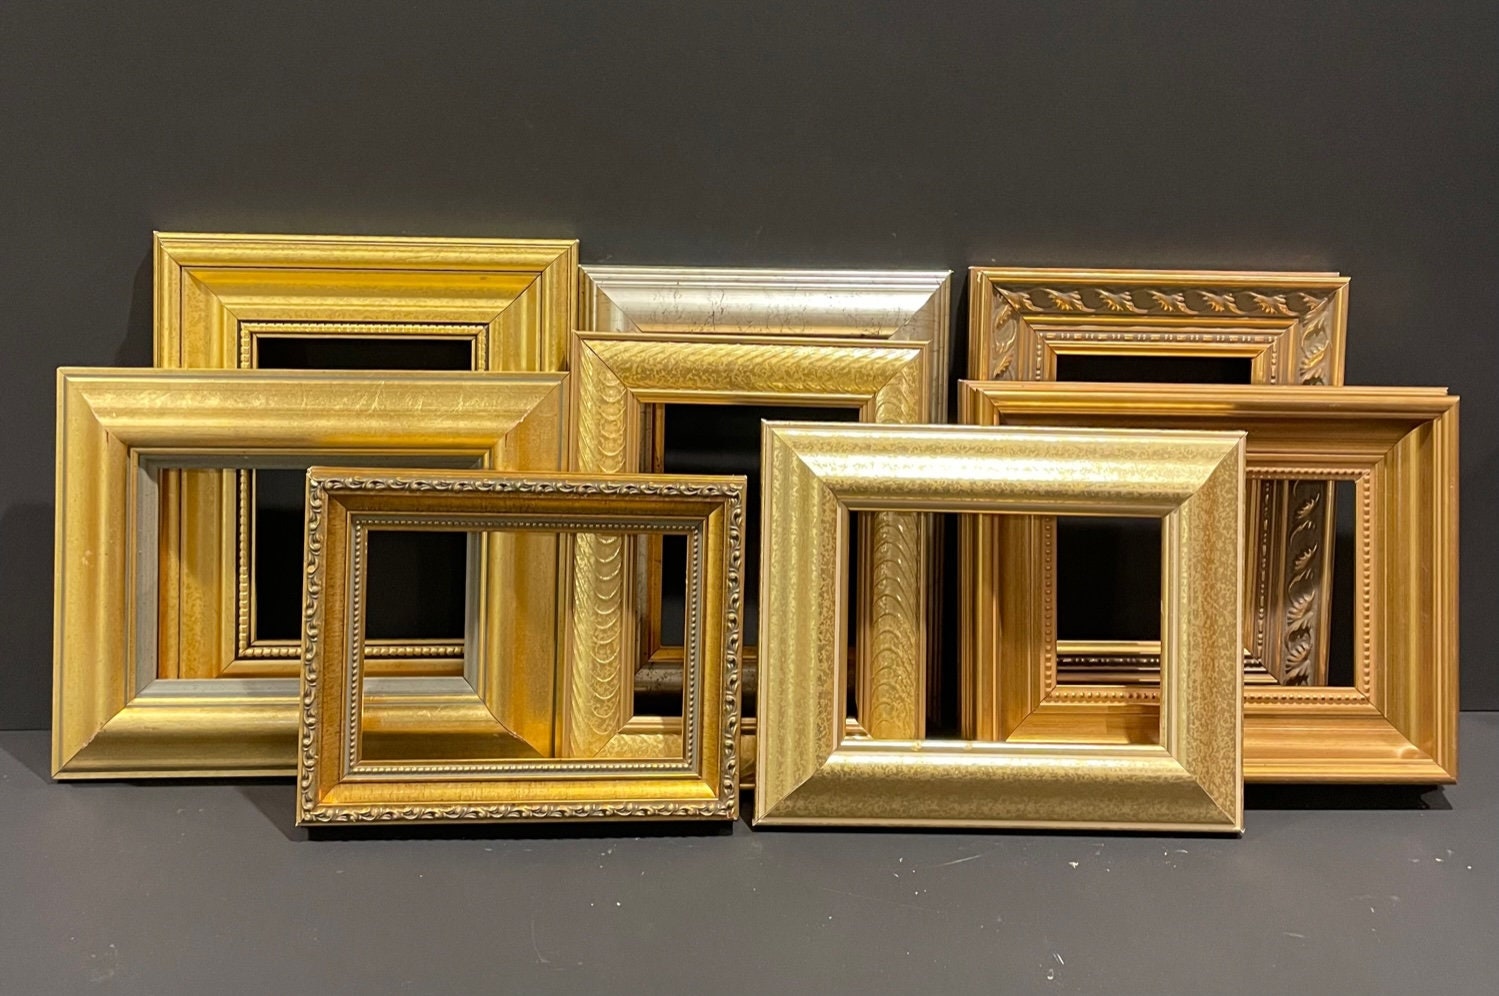 Multi-Mat Wood Gallery Frames - Wheat